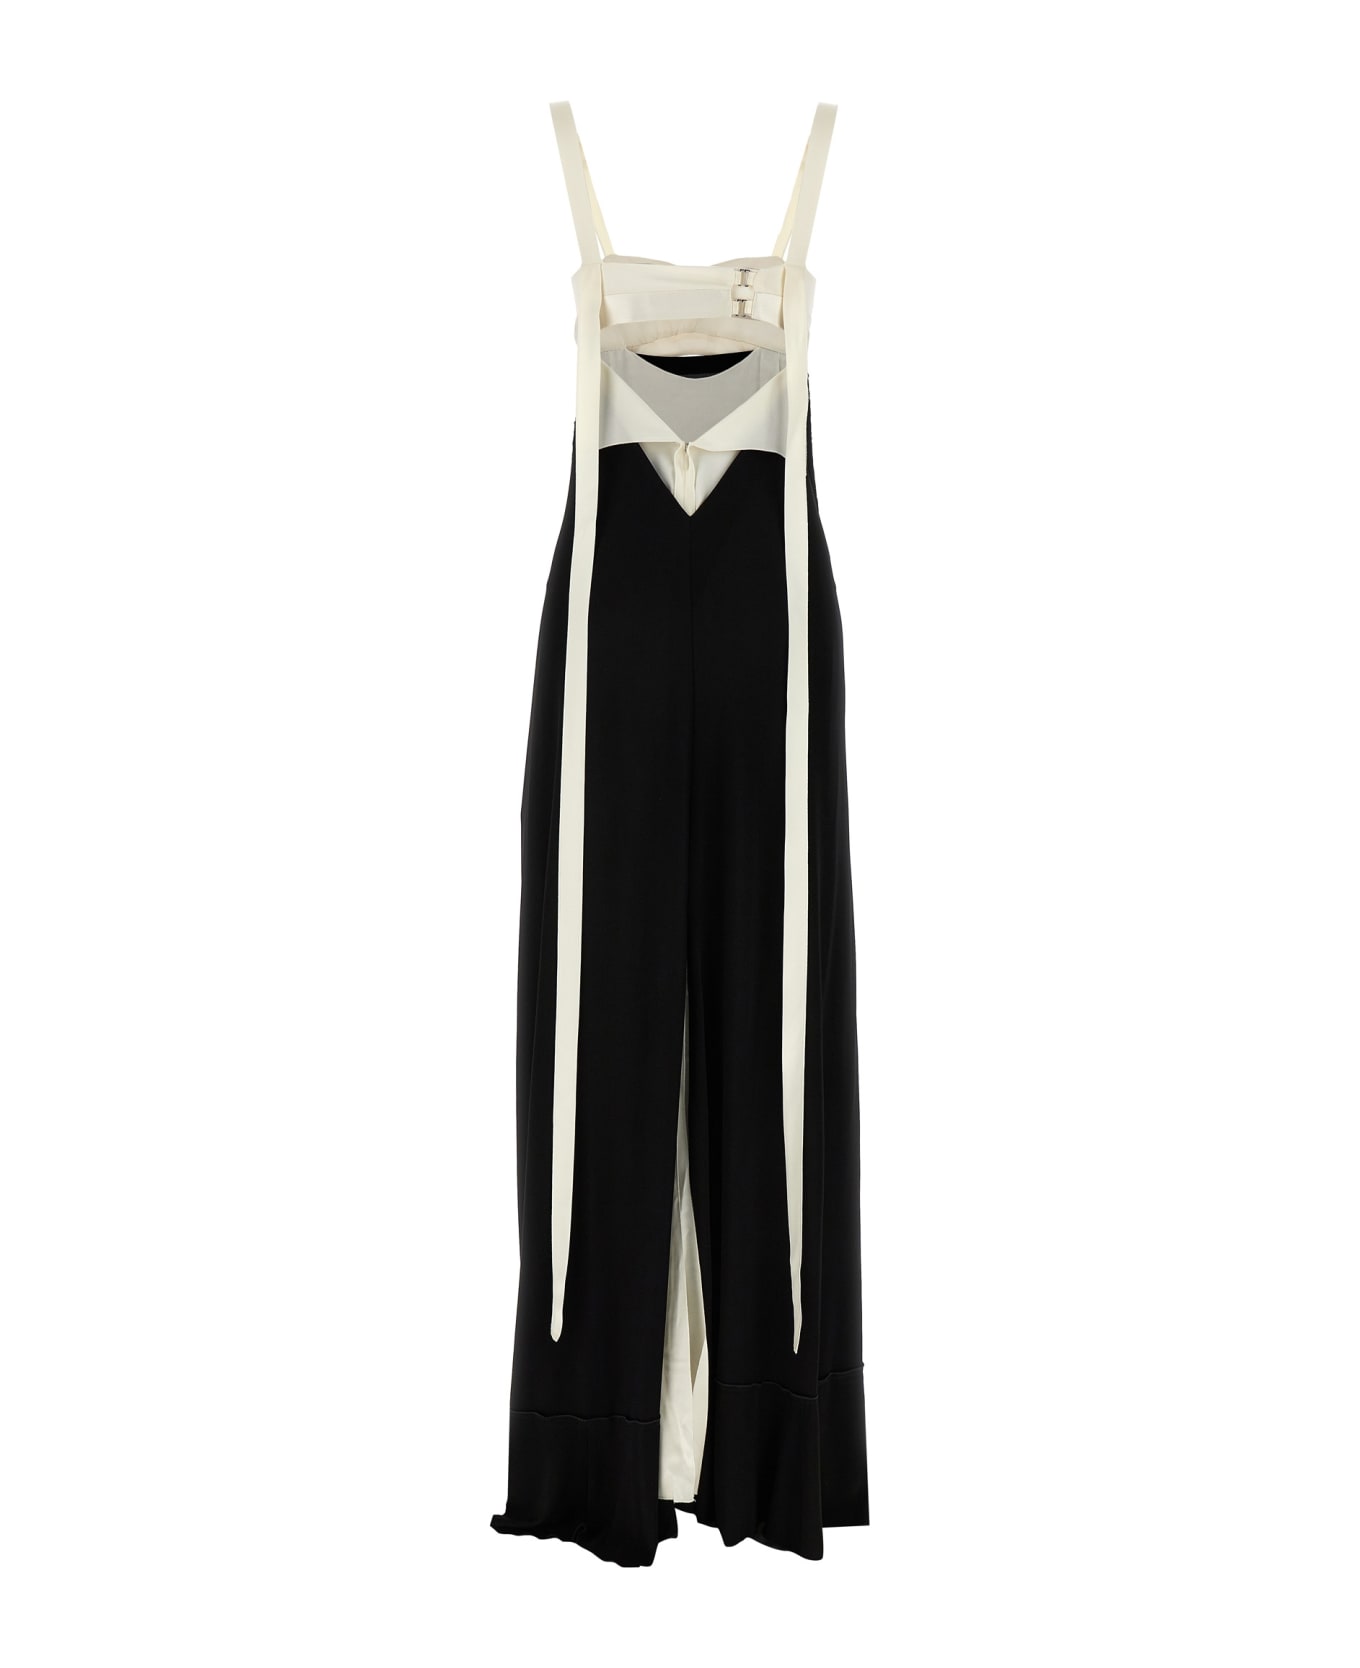 Victoria Beckham Bra Detail Dress - White/Black